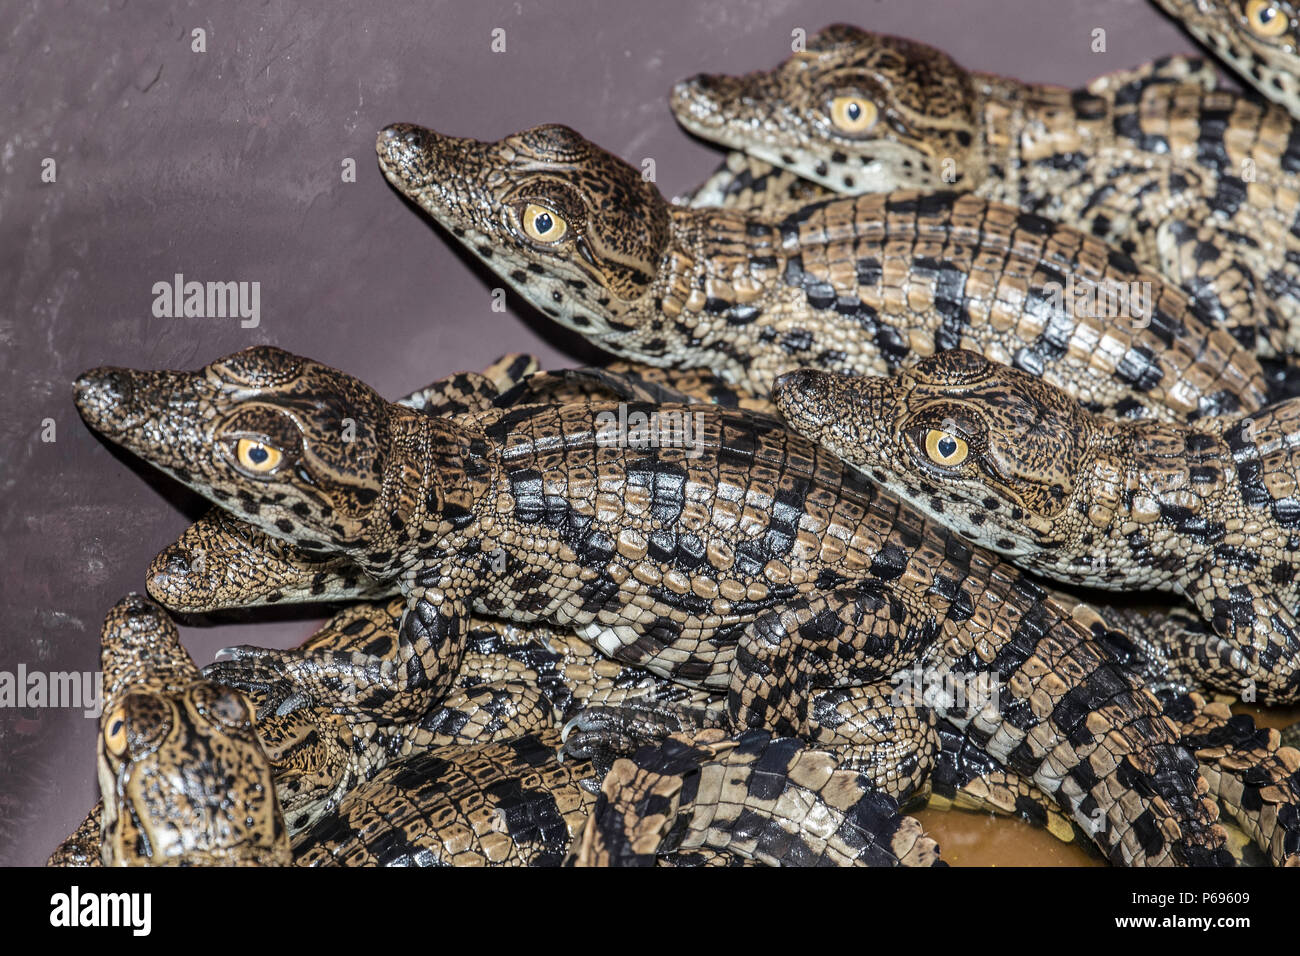 Baby Nile Crocodiles - Crocodylus Niloticus - hatchlings just emerged from shells. Stock Photo